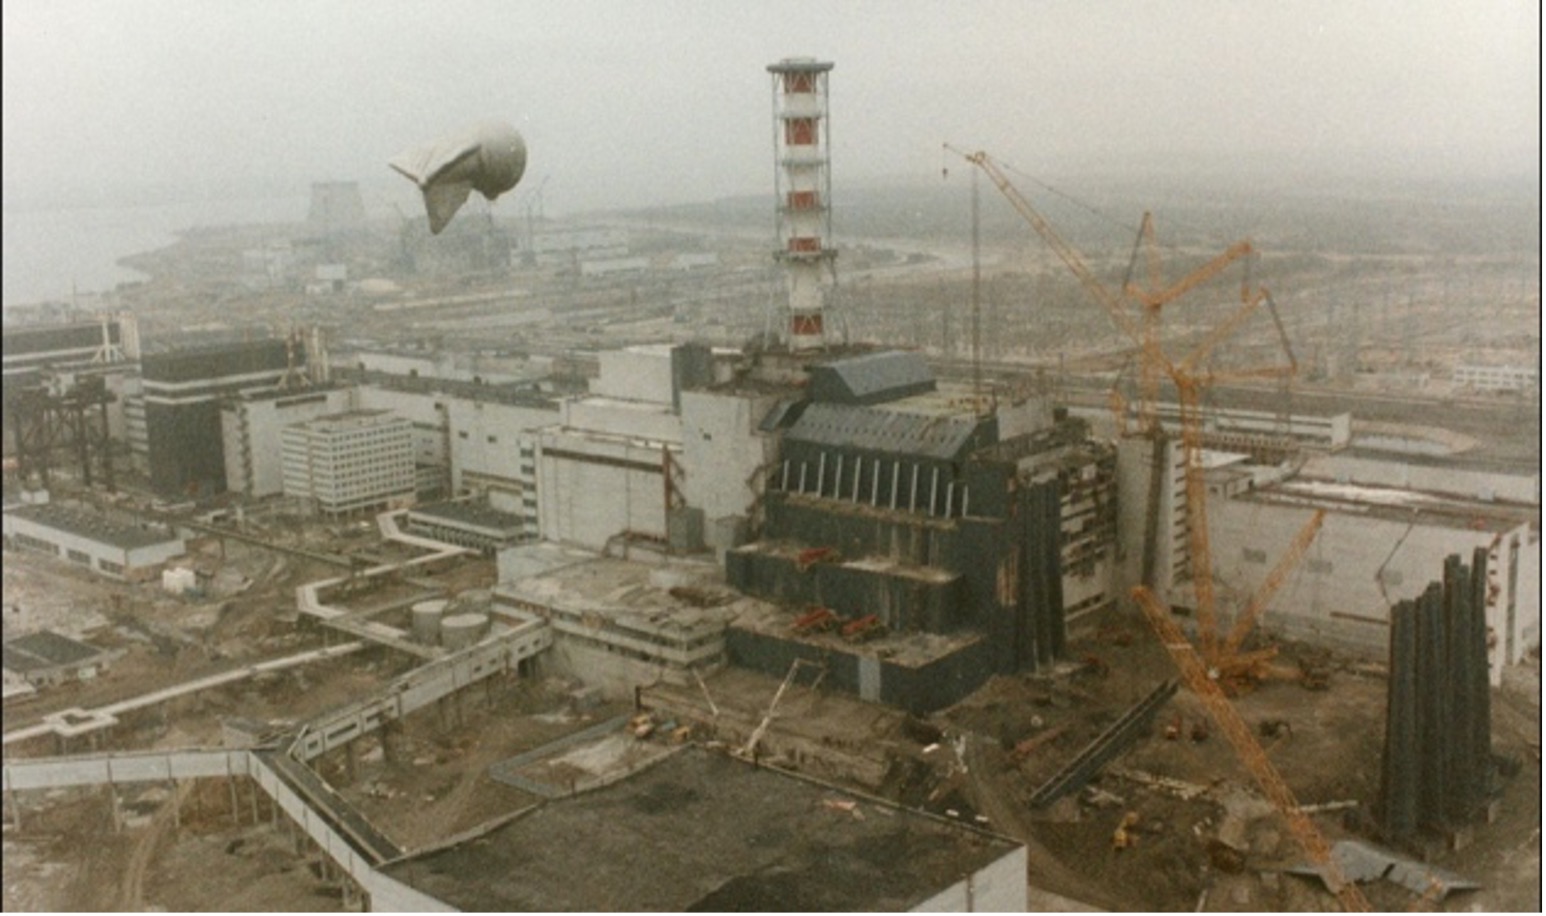 Je bekijkt nu Herdenking kernramp Tsjernobyl 25 april in Middelburg en Borssele